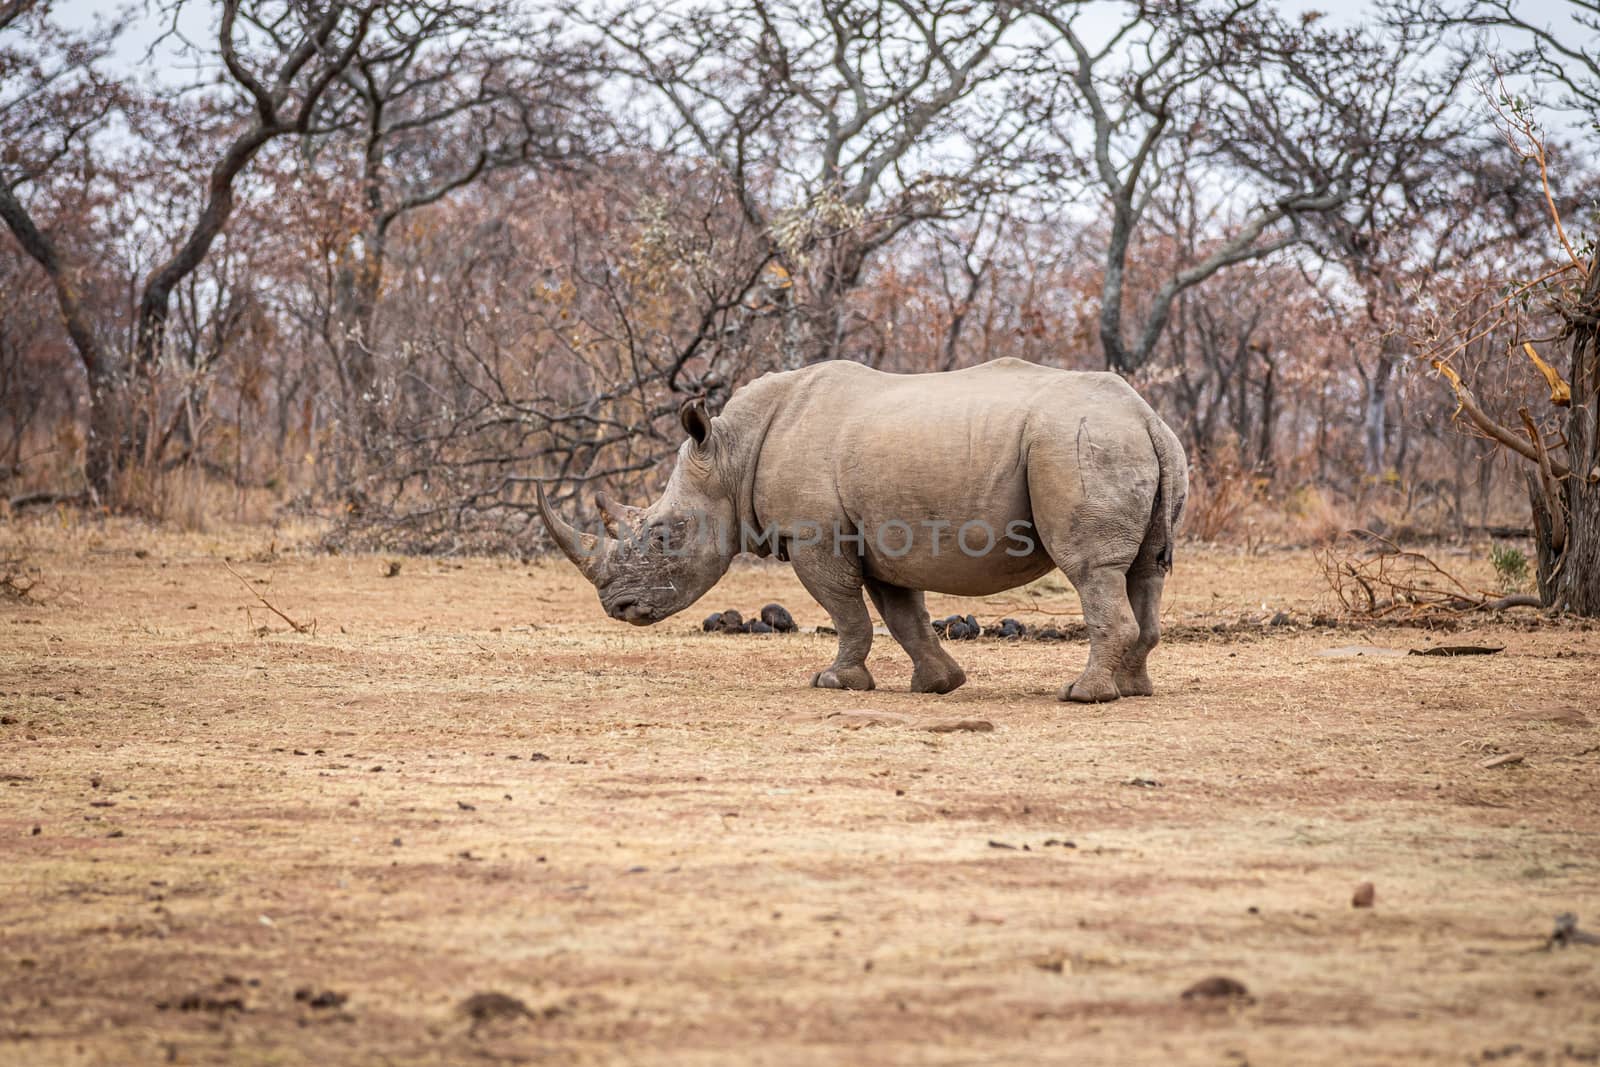 White rhino walking in the bush, South Africa.